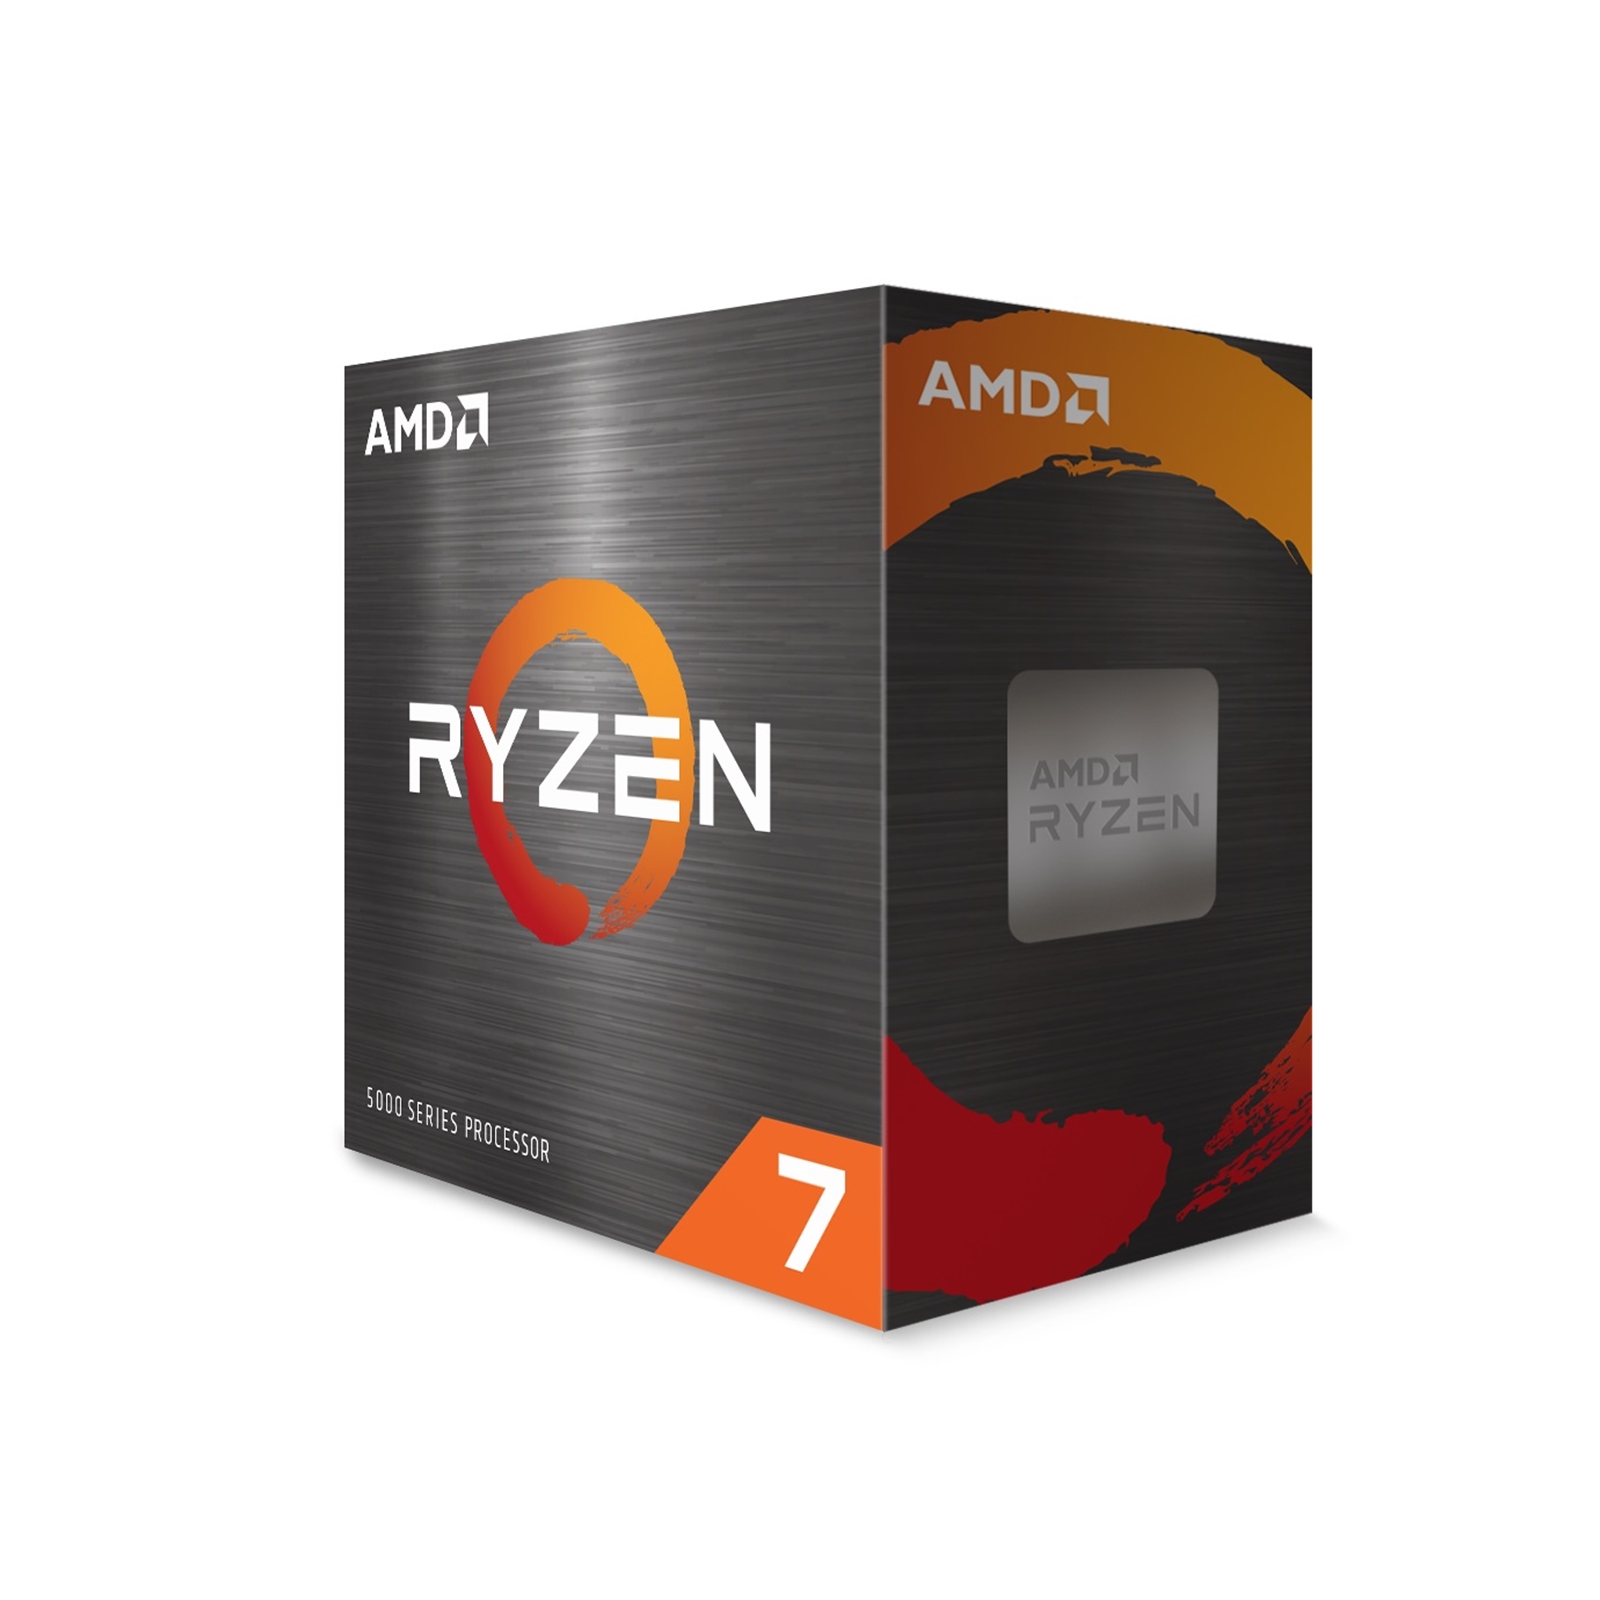 AMD Ryzen 7 5800X 3.8GHz 8 Core AM4 Processor, 16 Threads, 4.5GHz Boost